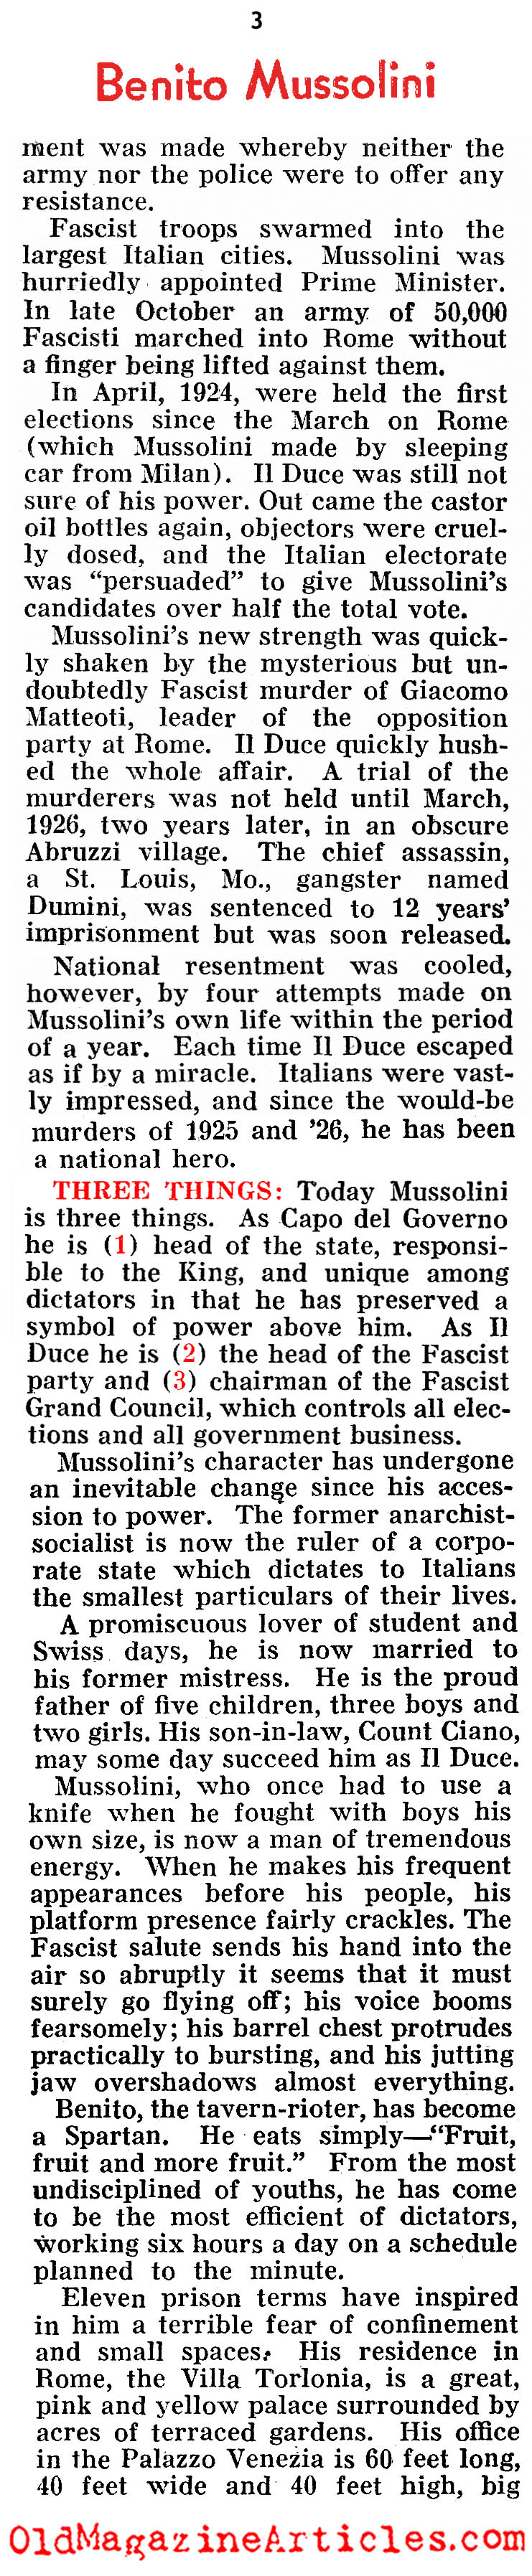 Who Was Mussolini? (Pathfinder Magazine, 1937)